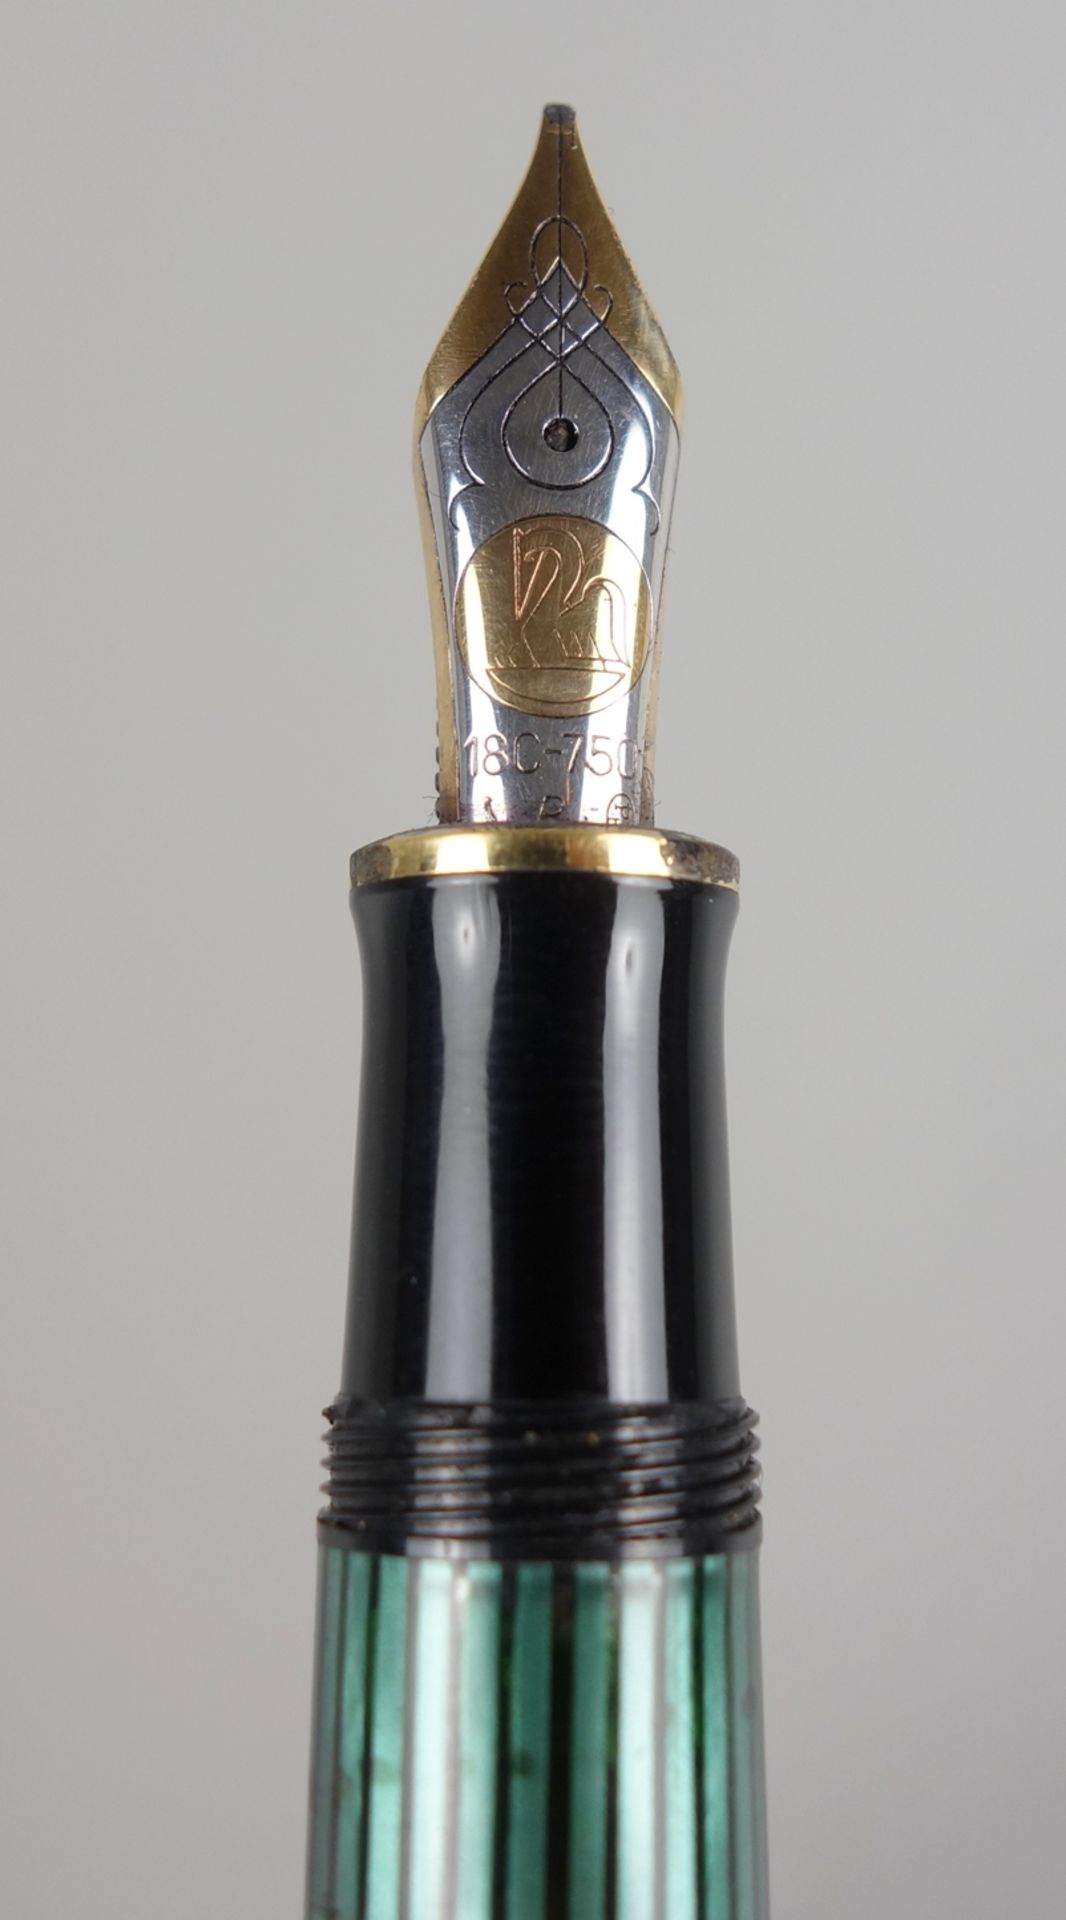 Pelikan Souverän piston fountain pen, M800 - Image 3 of 3